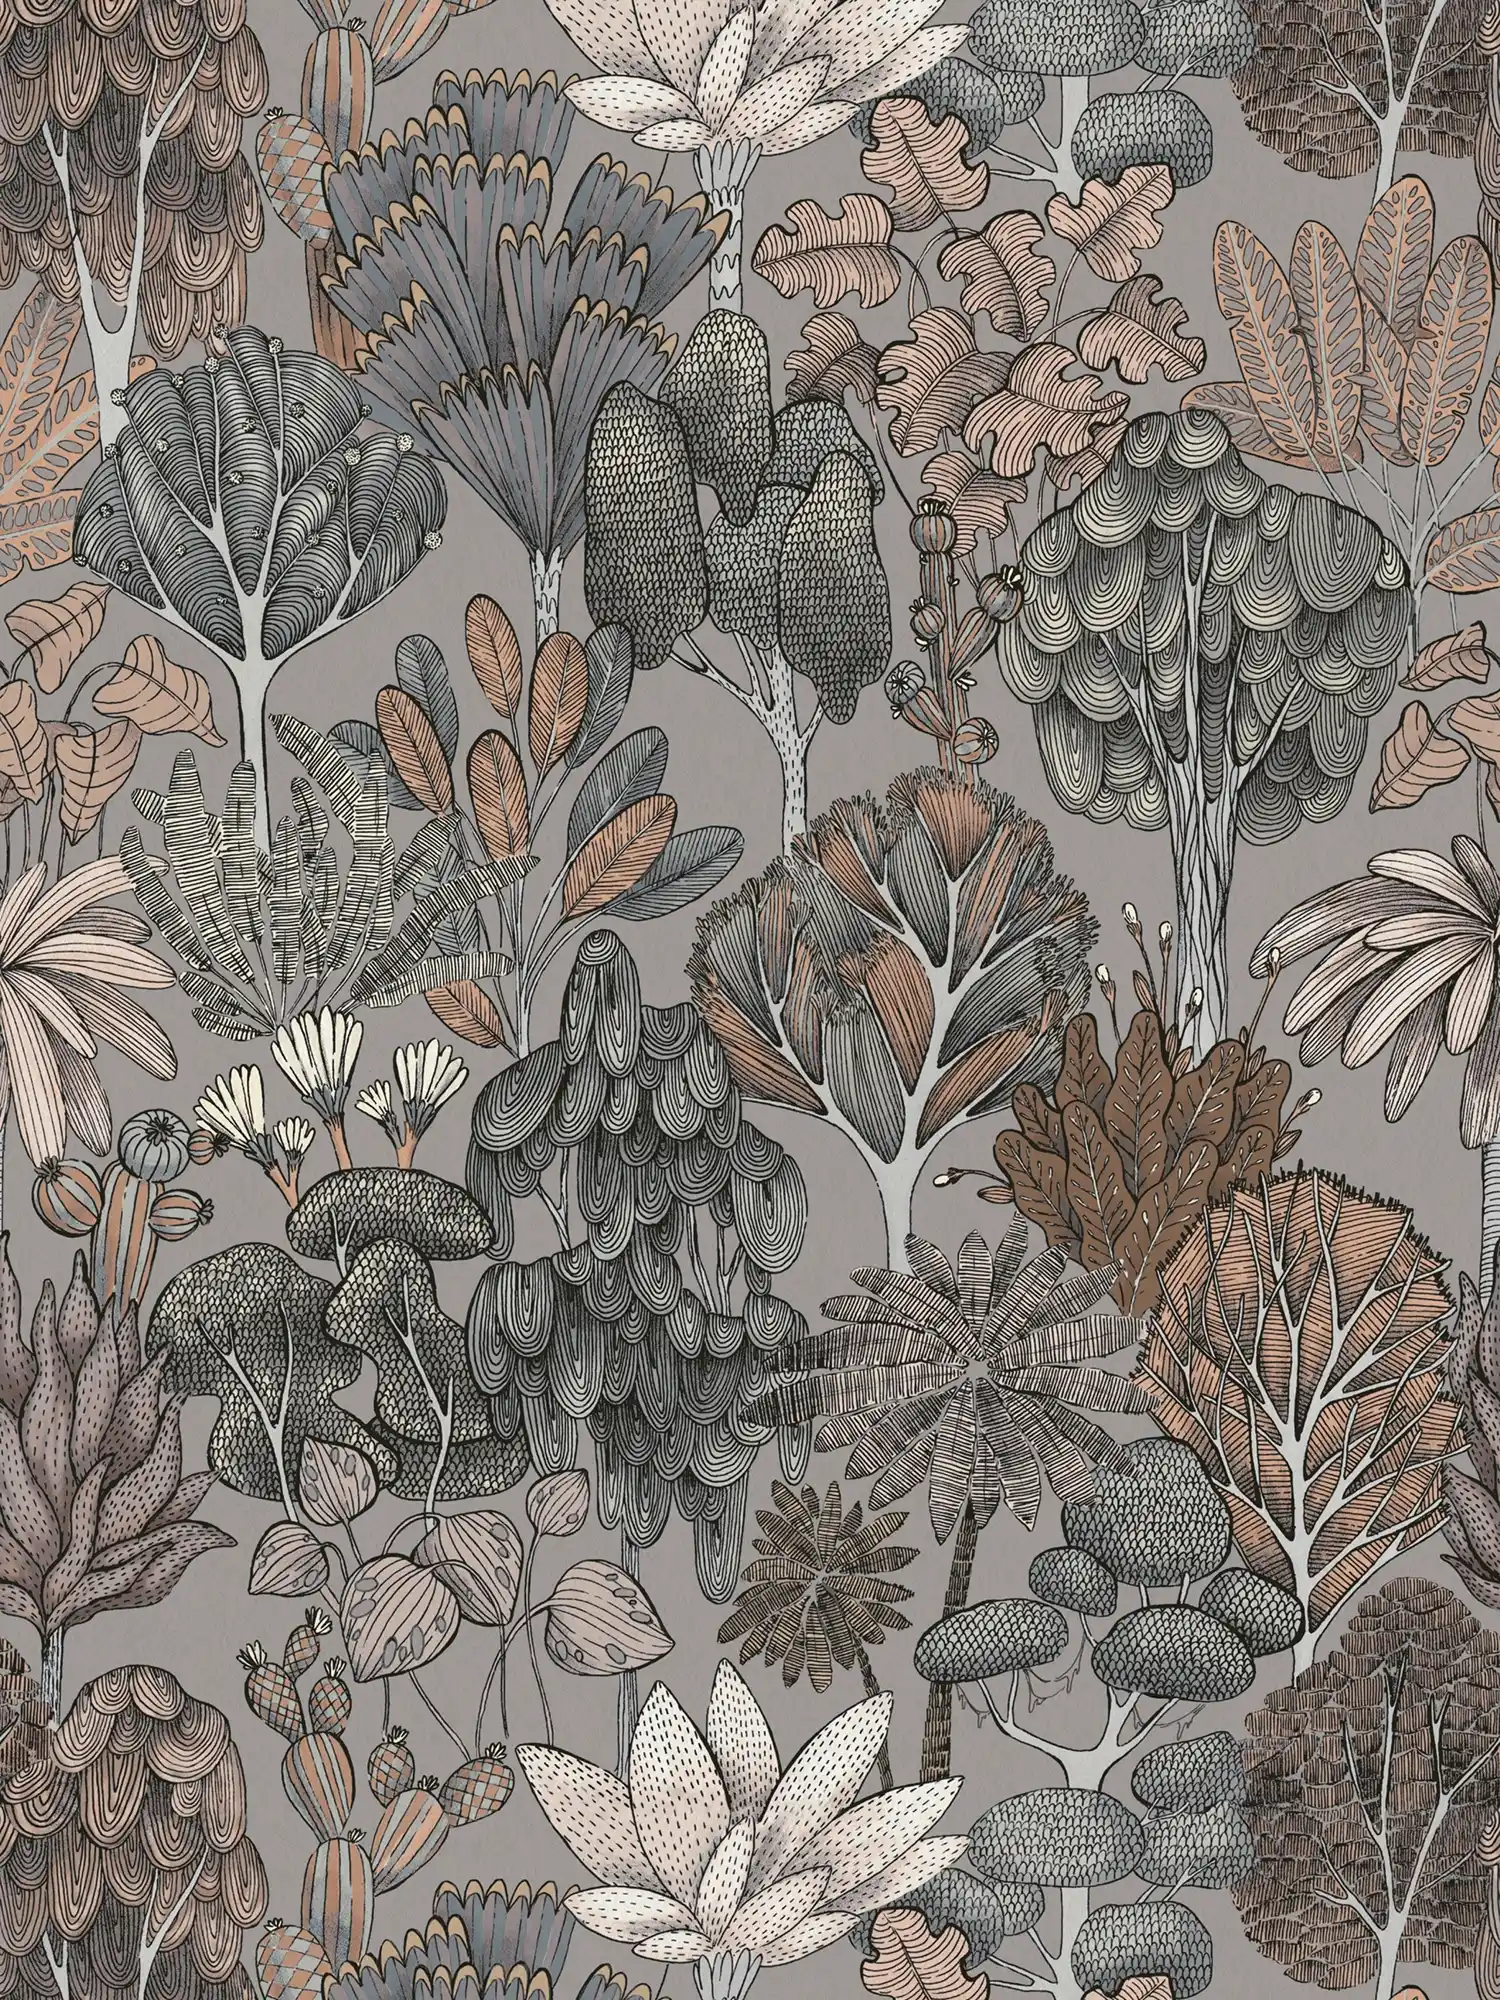         Wallpaper grey beige with floral pattern in doodle look - grey, beige, orange
    